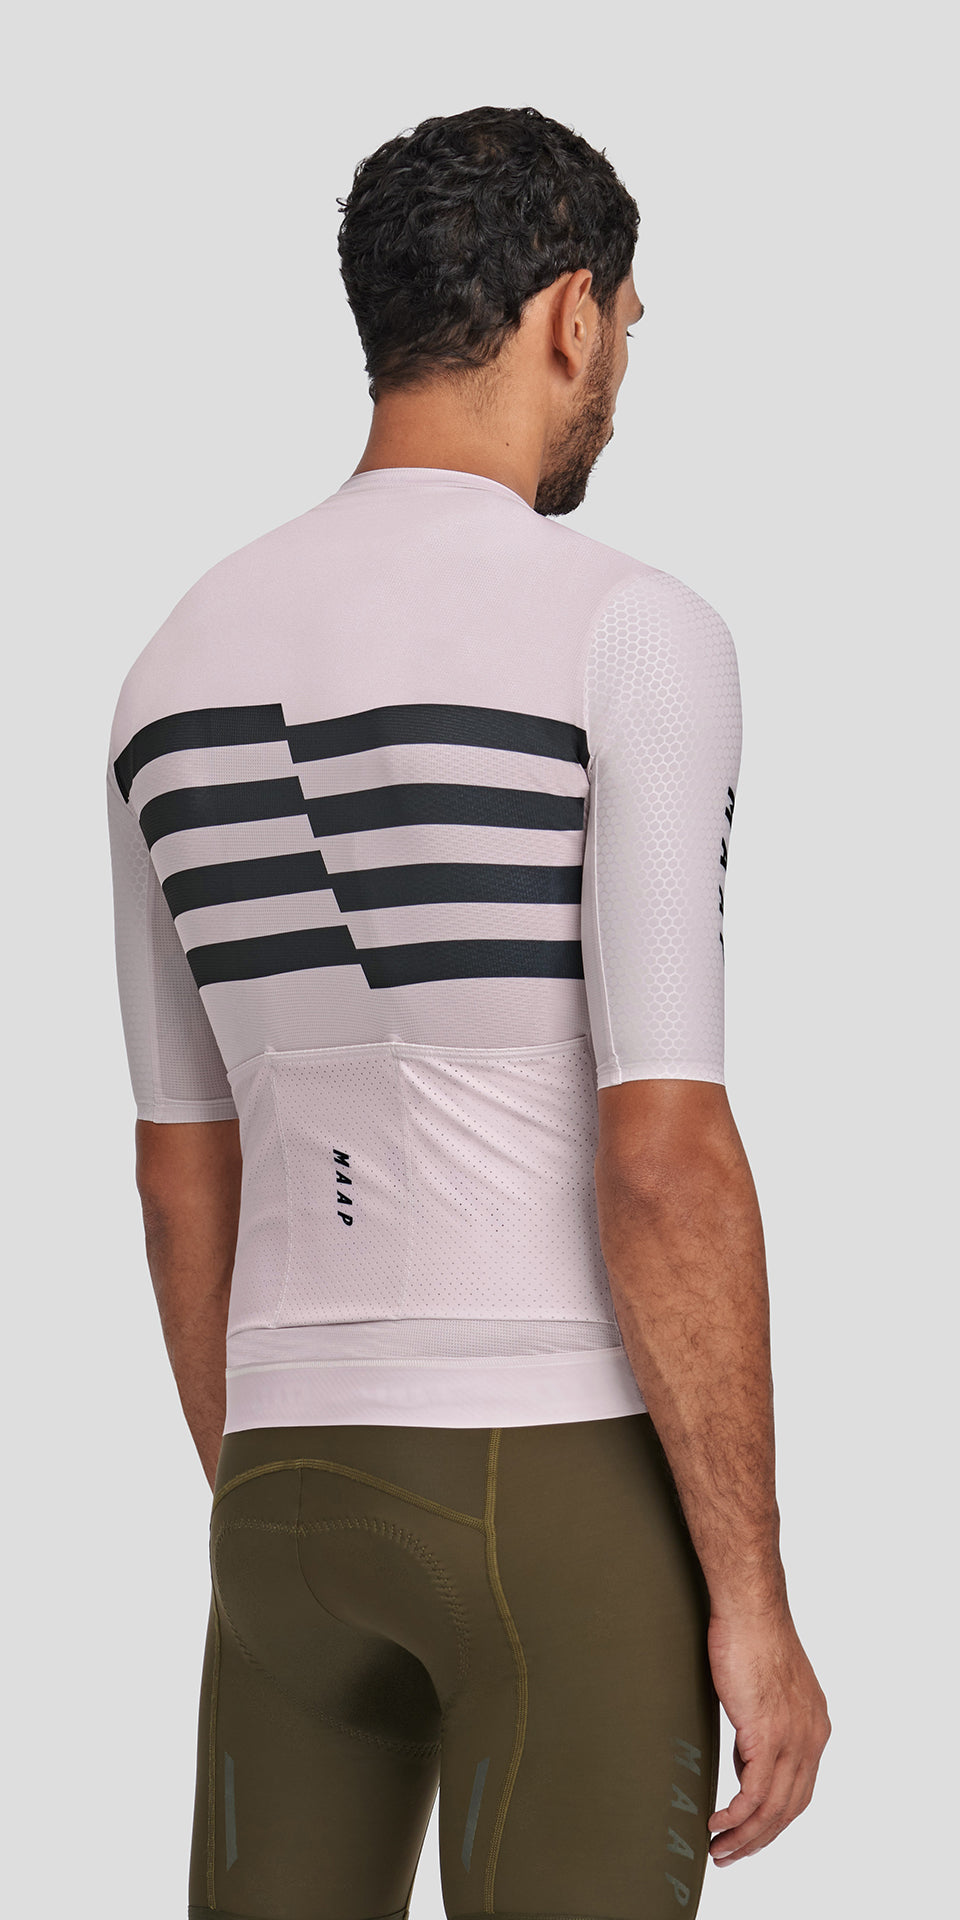 Emblem Pro Hex Jersey - MAAP Cycling Apparel